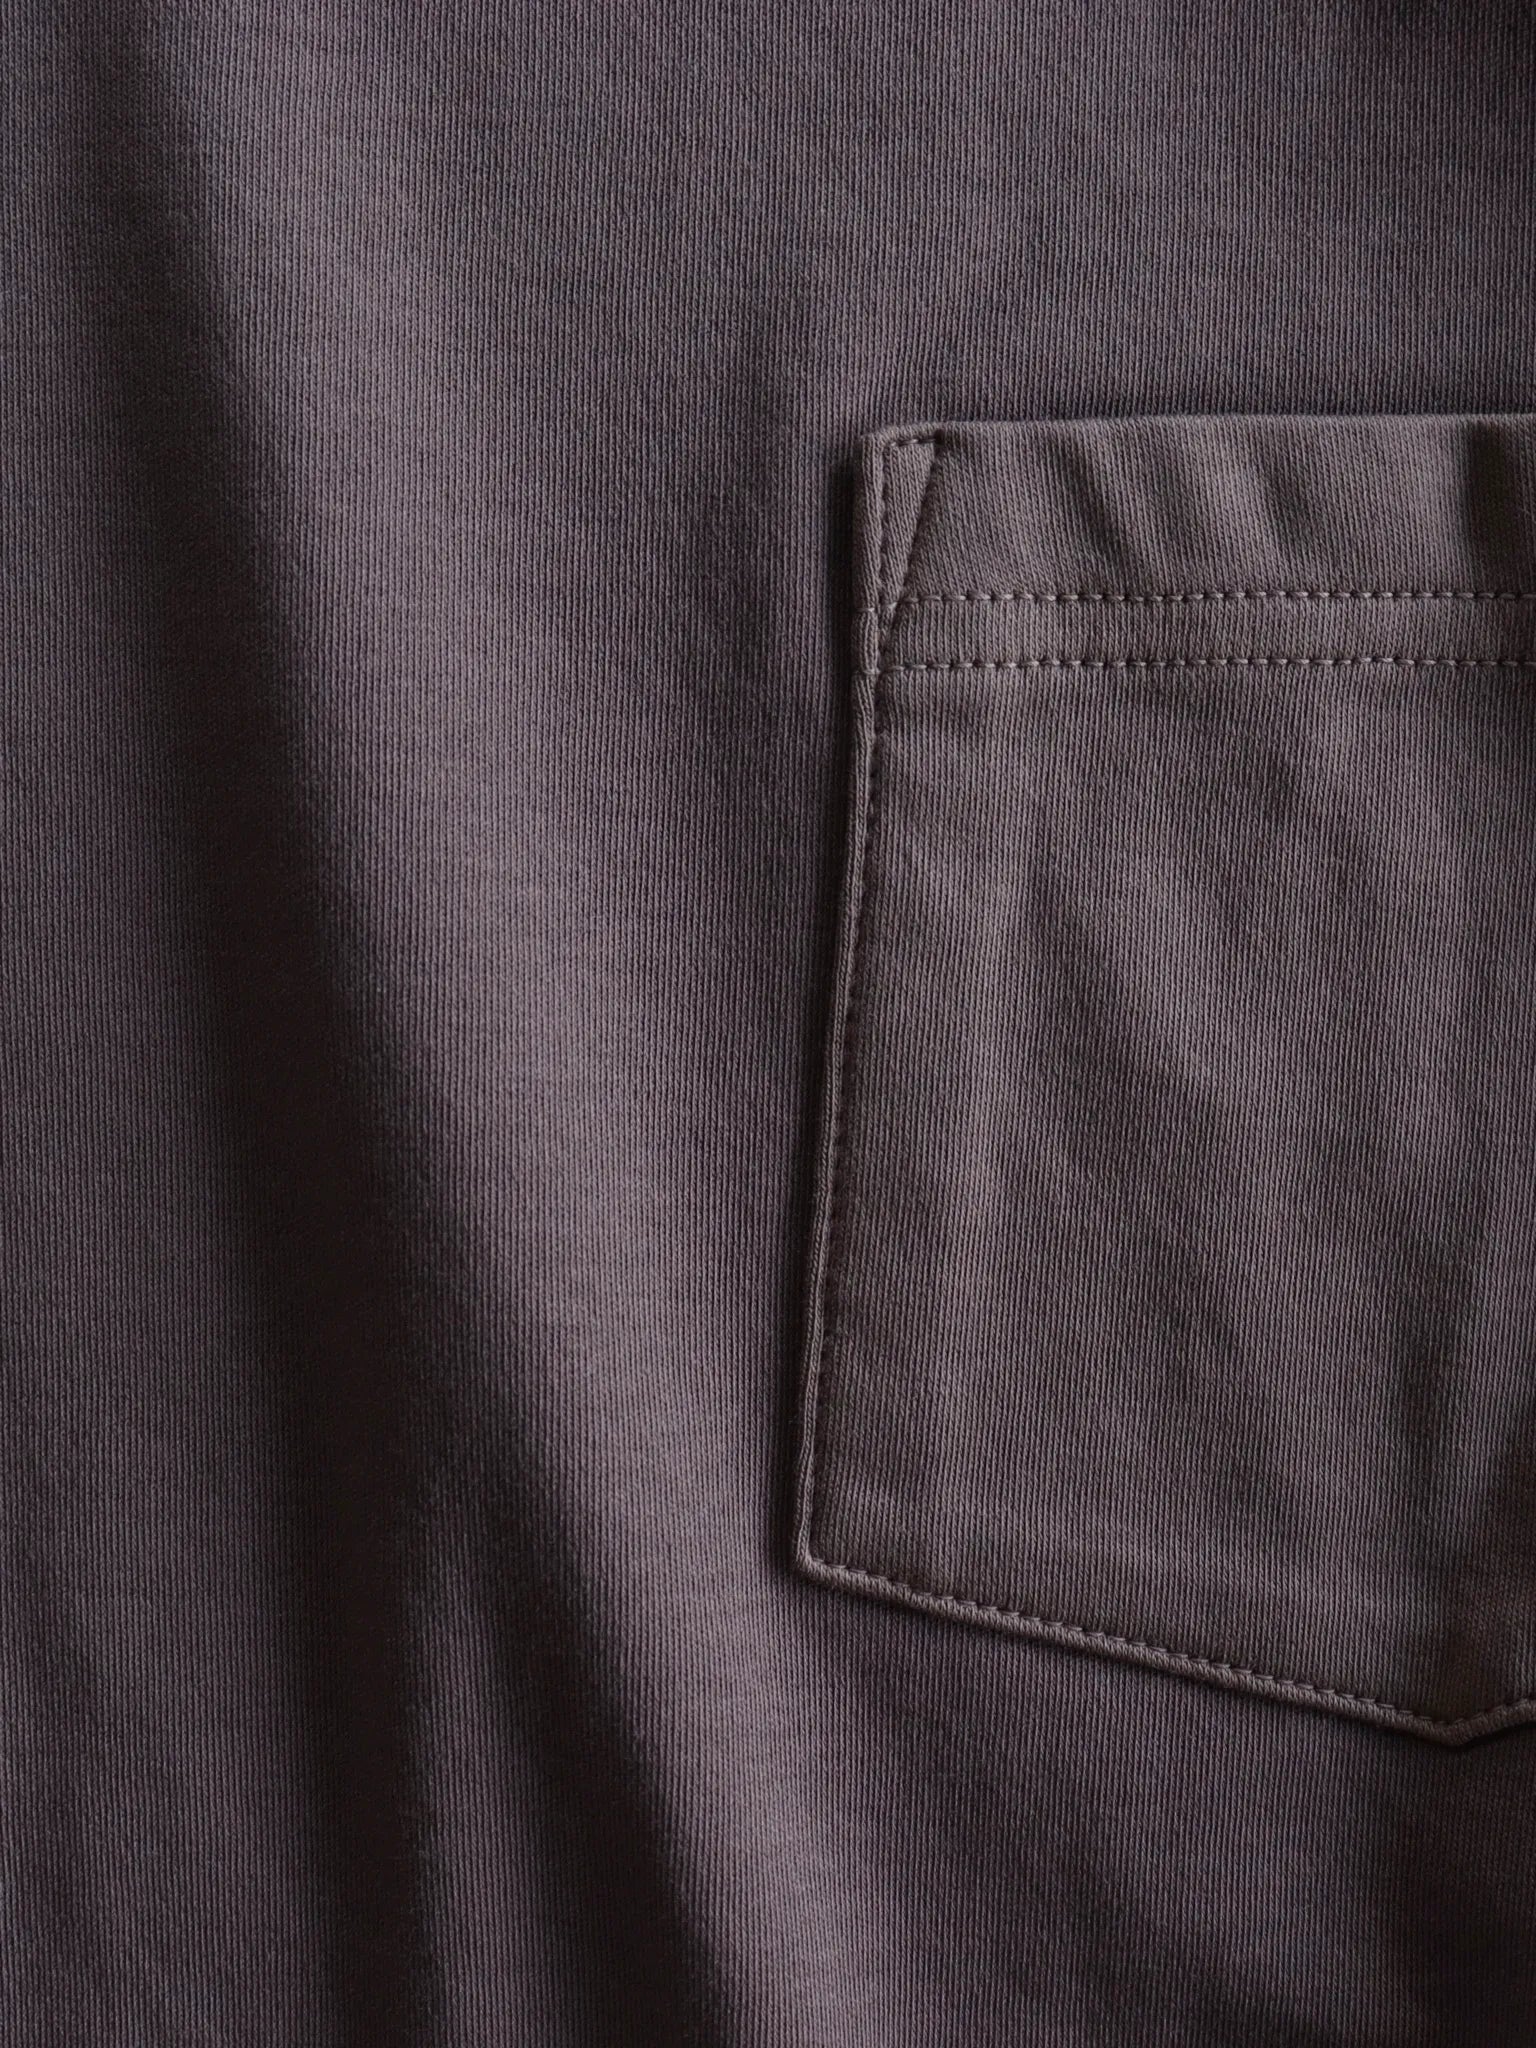 the-inoue-brothers-garment-dye-pocket-l-s-t-shirt-ash-brown-5